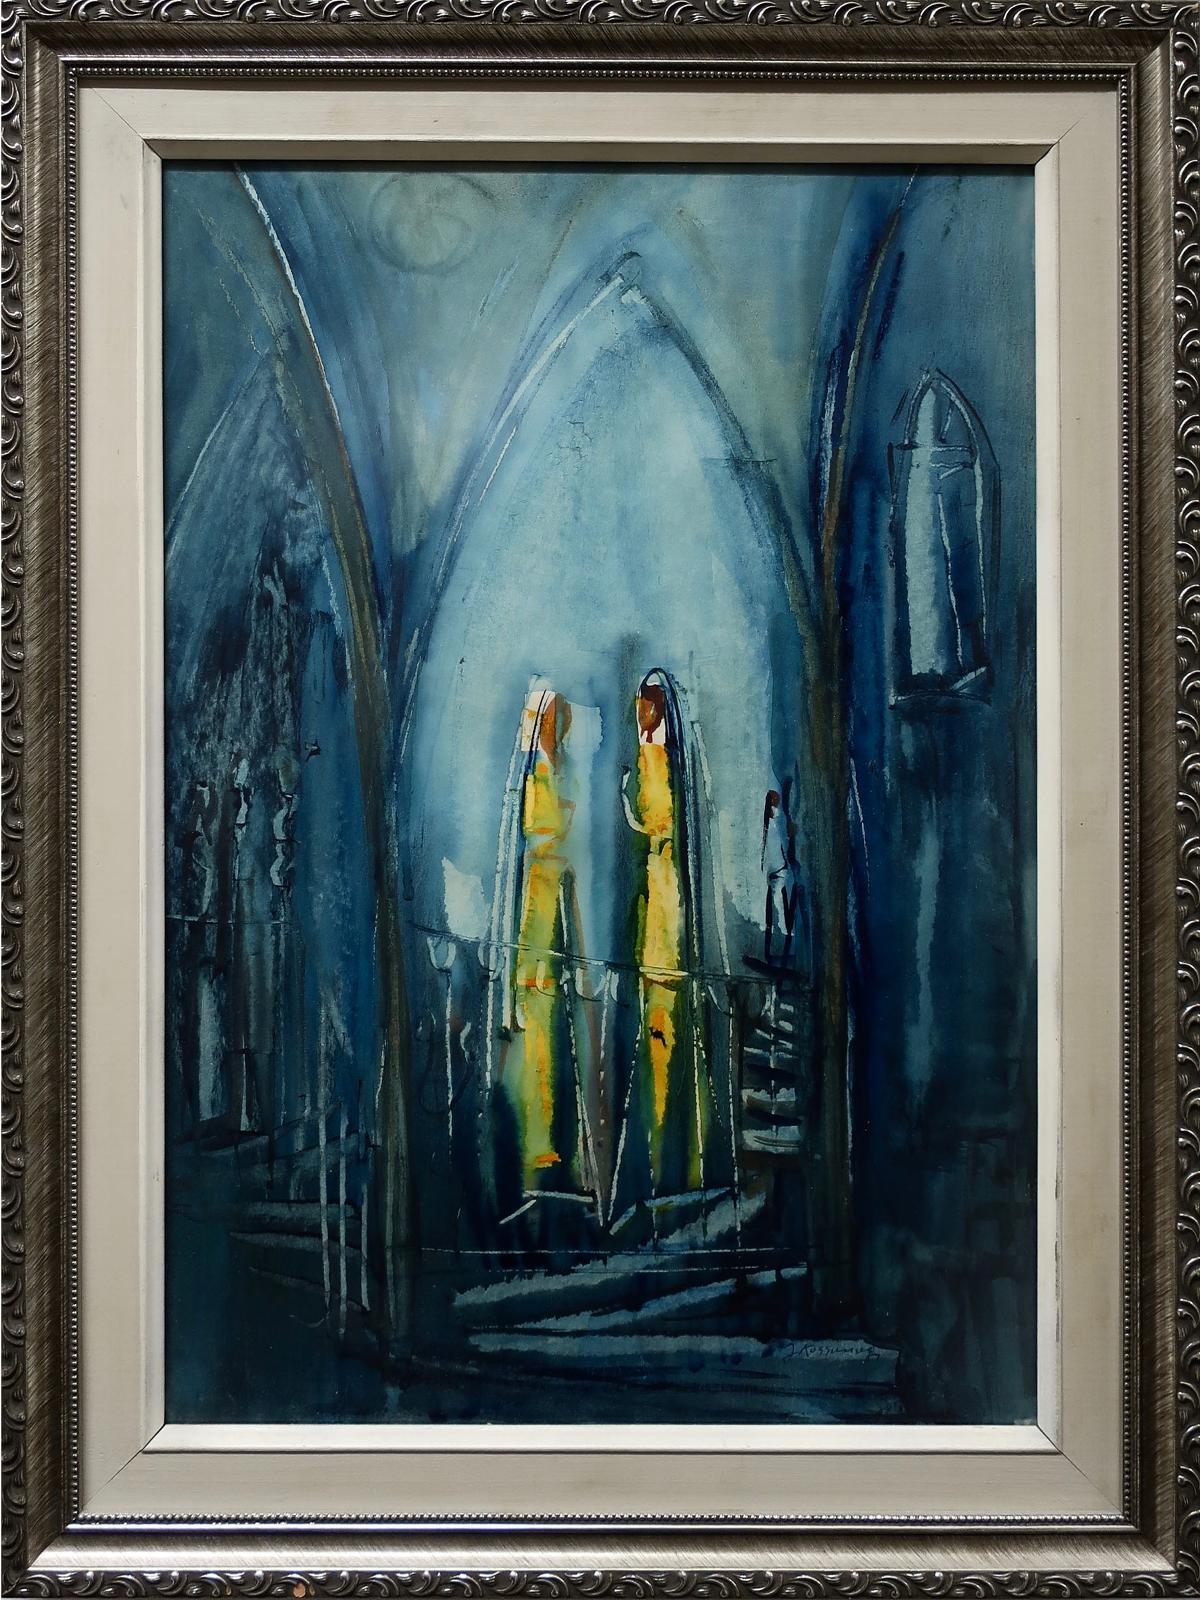 Joseph Kossonogi (1908-1981) - Untitled (Interior Study With Two Women In Yellow)